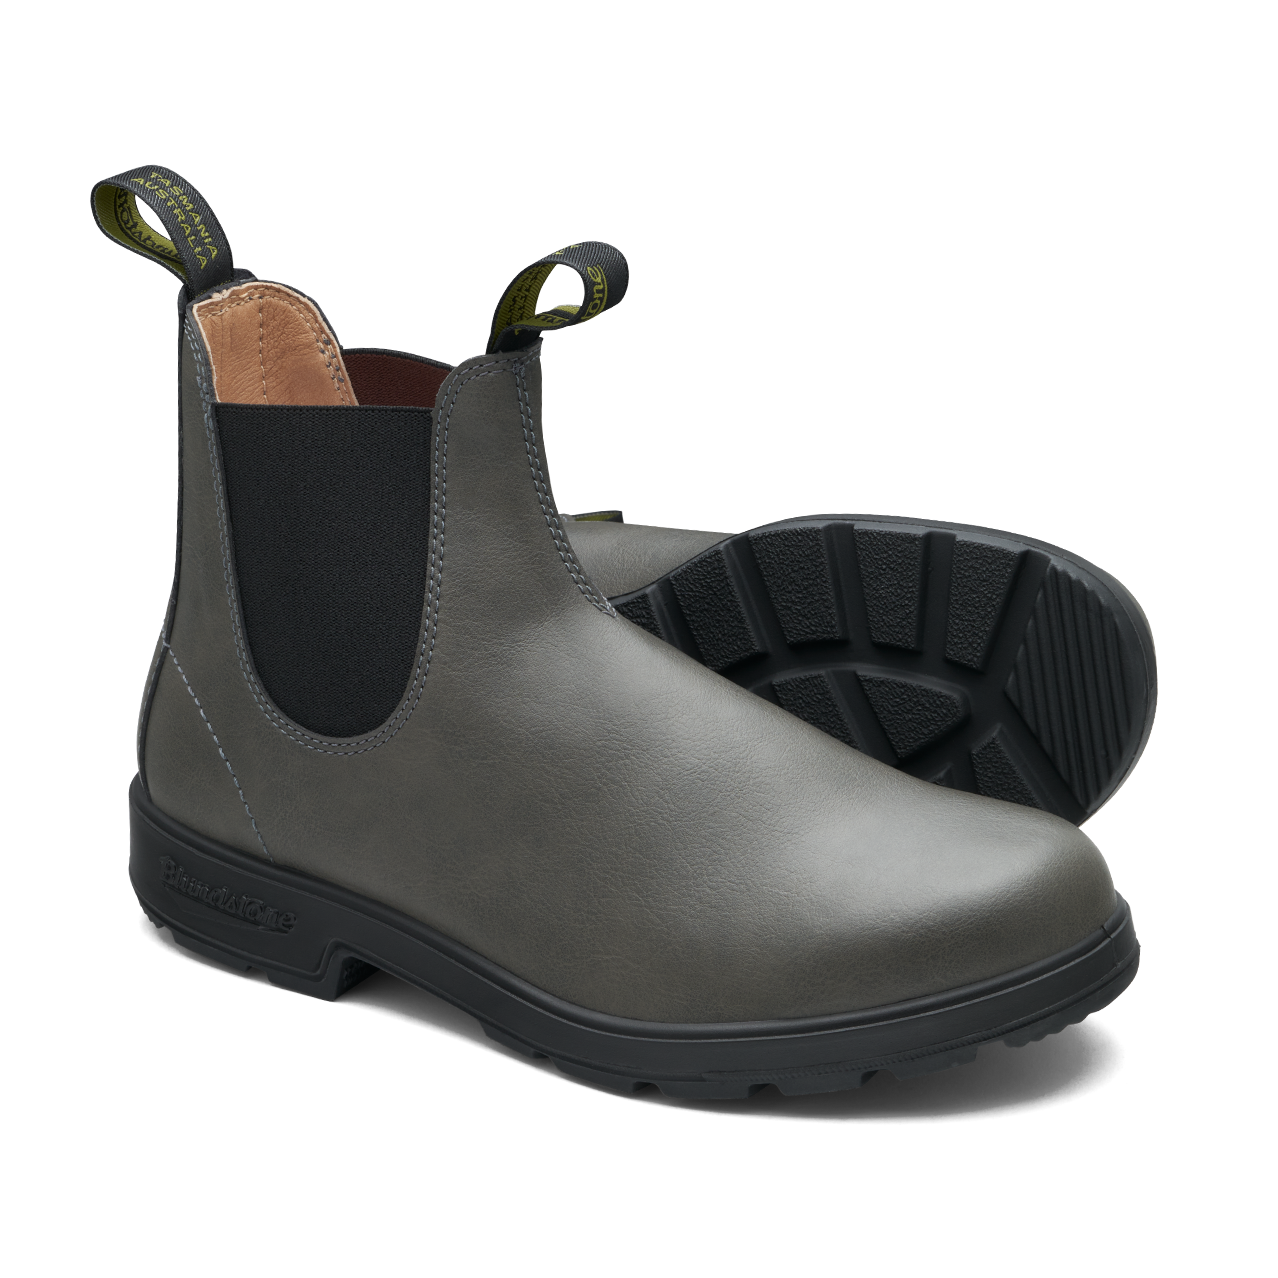 Blundstone #2210 Original Vegan boot steel grey pair sole